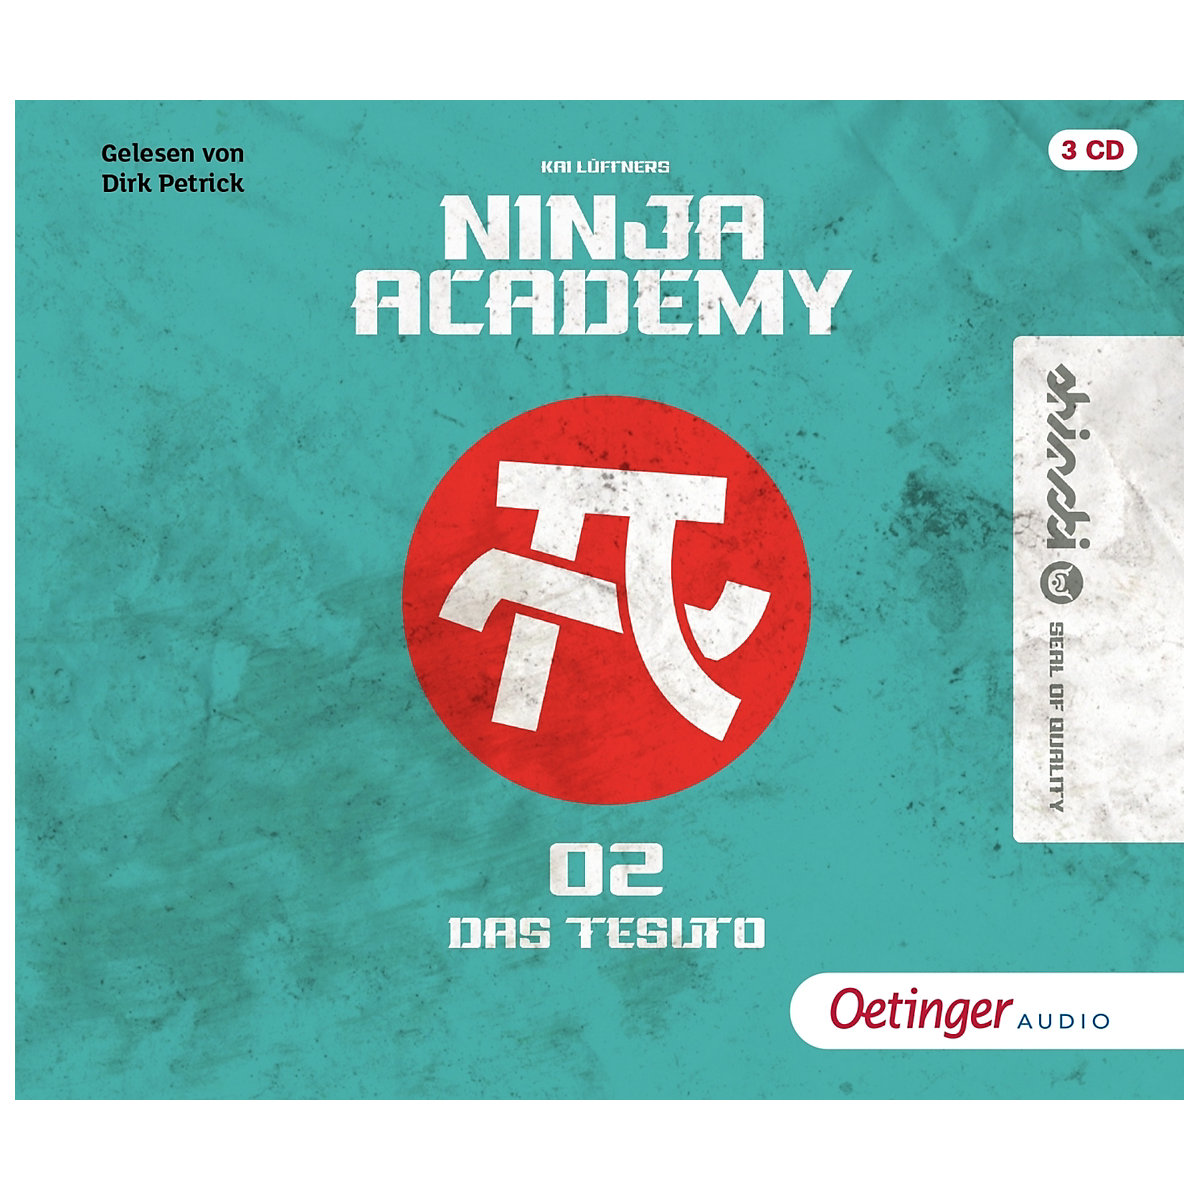 Hörbuch Ninja Academy 2 Die Prüfung mp3-CD